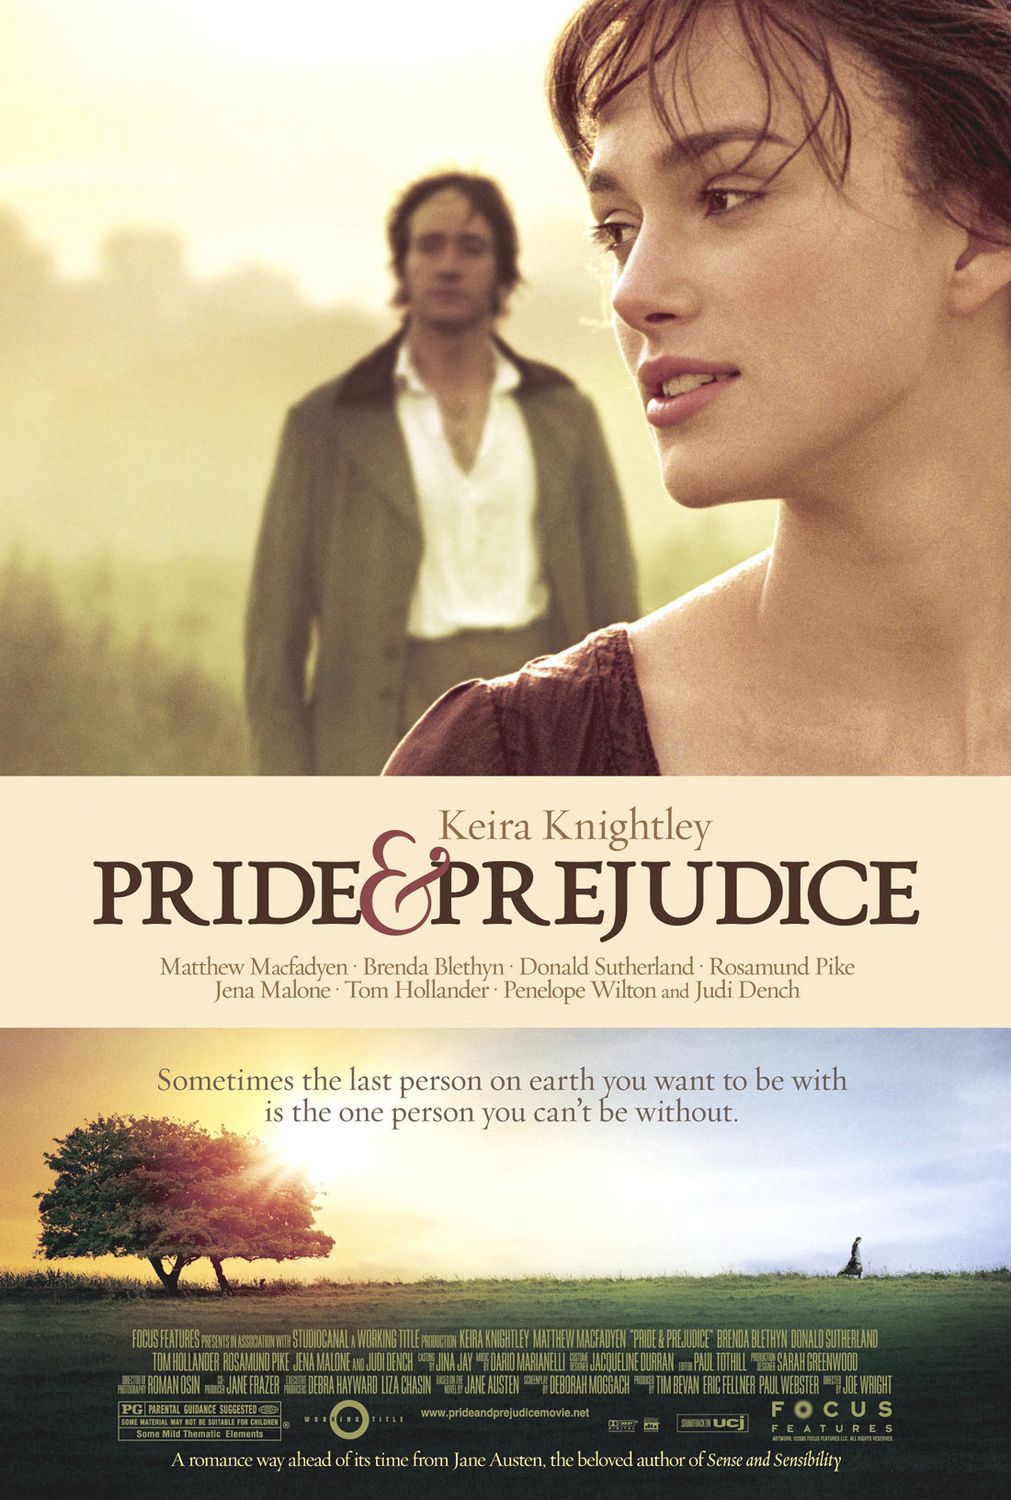 Extra Large Movie Poster Image for Pride & Prejudice (#2 of 2)